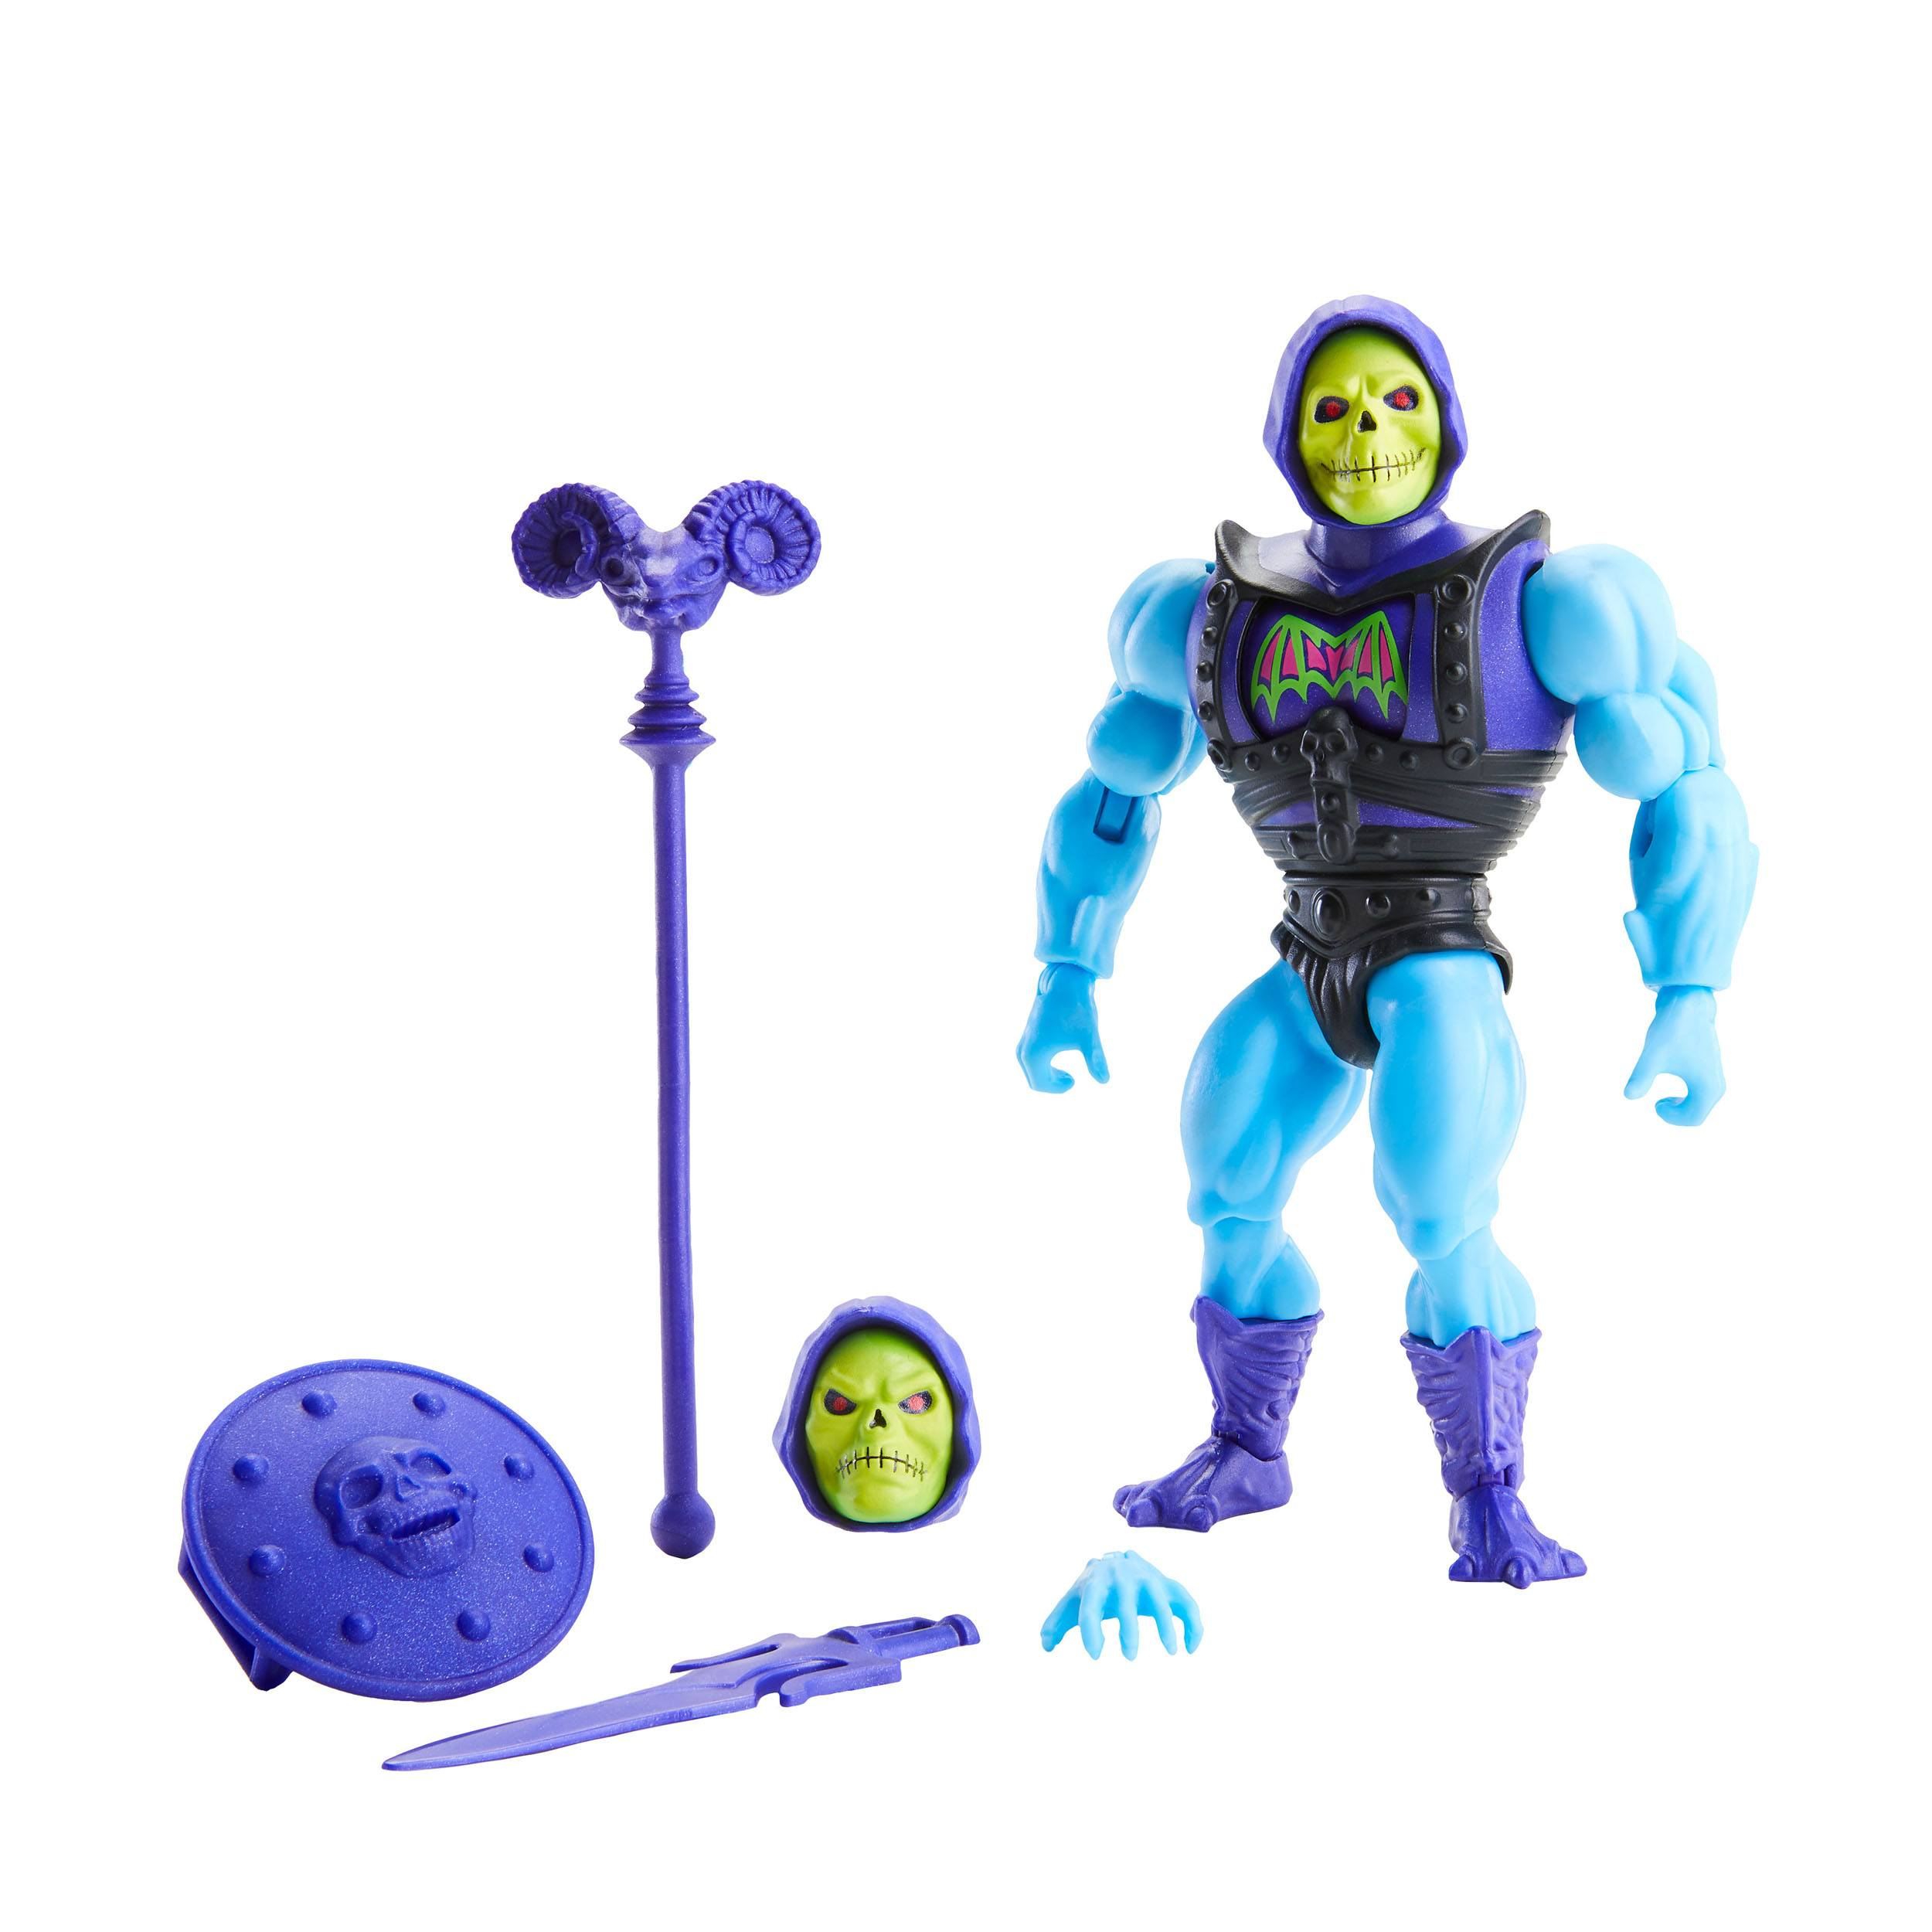 MATTEL Masters of the 14 Actionfigur Universe Deluxe Origins Armor Skeletor Figur: Battle cm